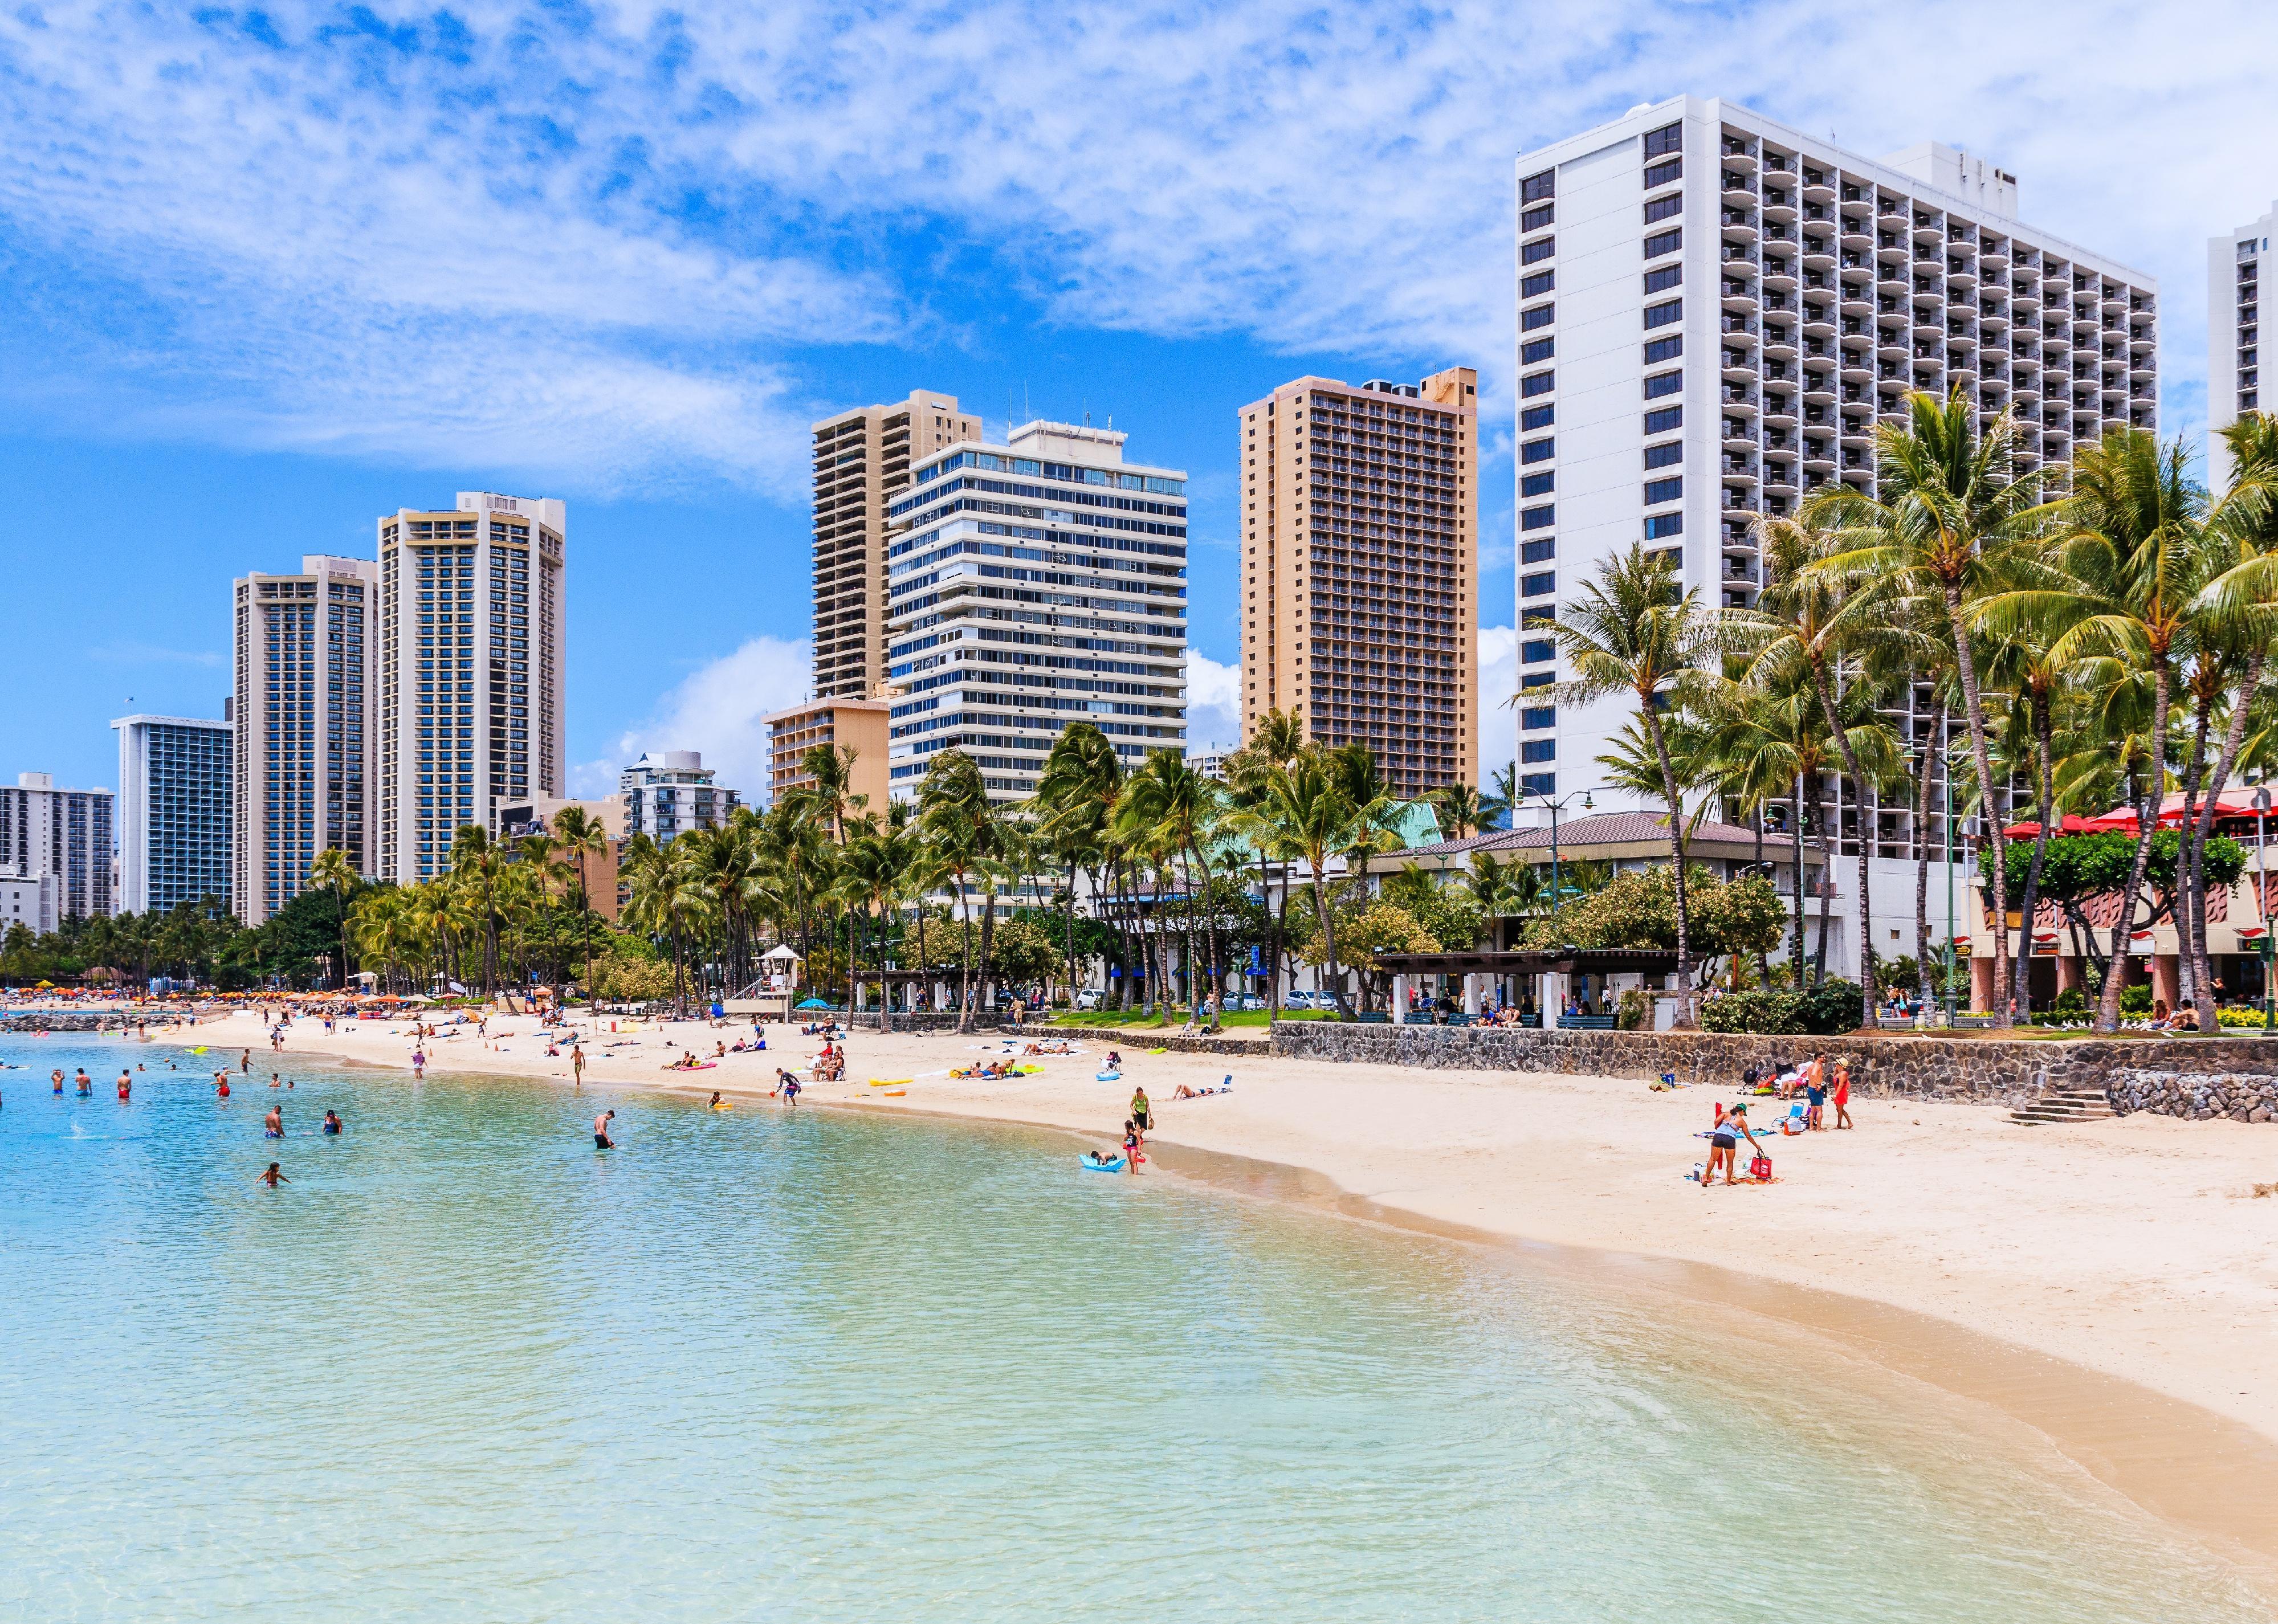 The sun shines on beautiful Waikiki Beach in Honolulu.